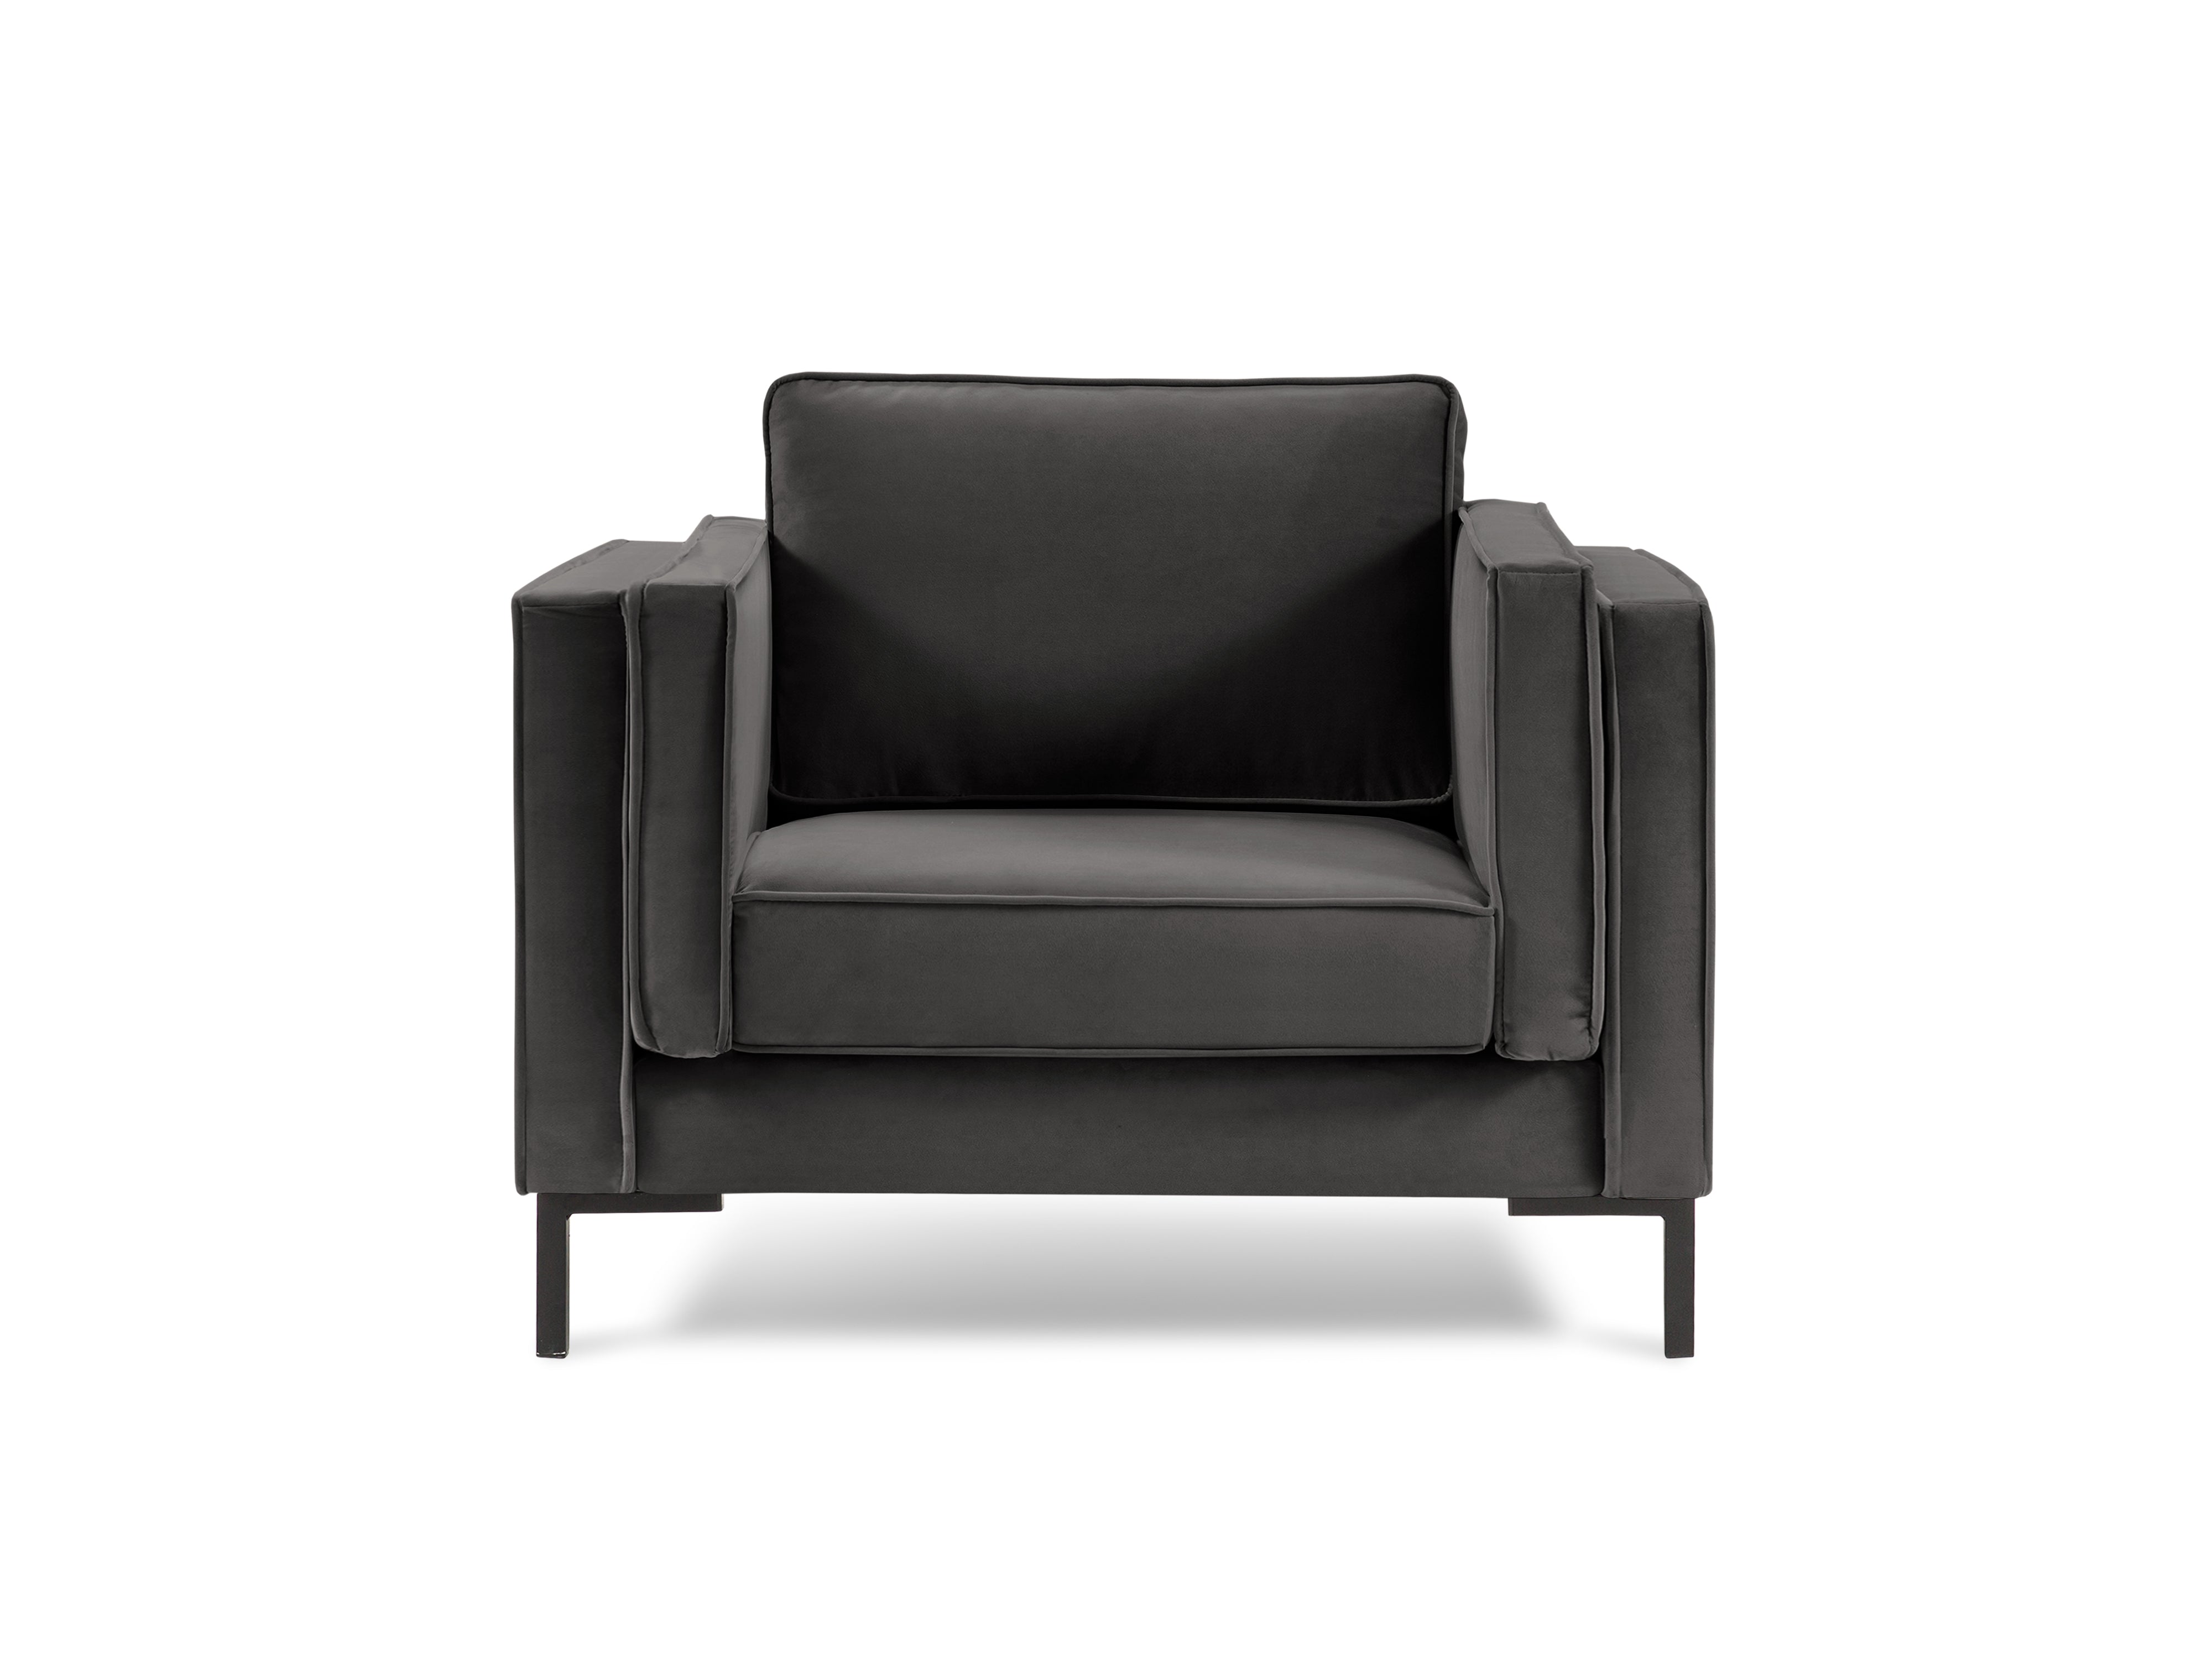 LUIS dark grey velvet armchair with black base